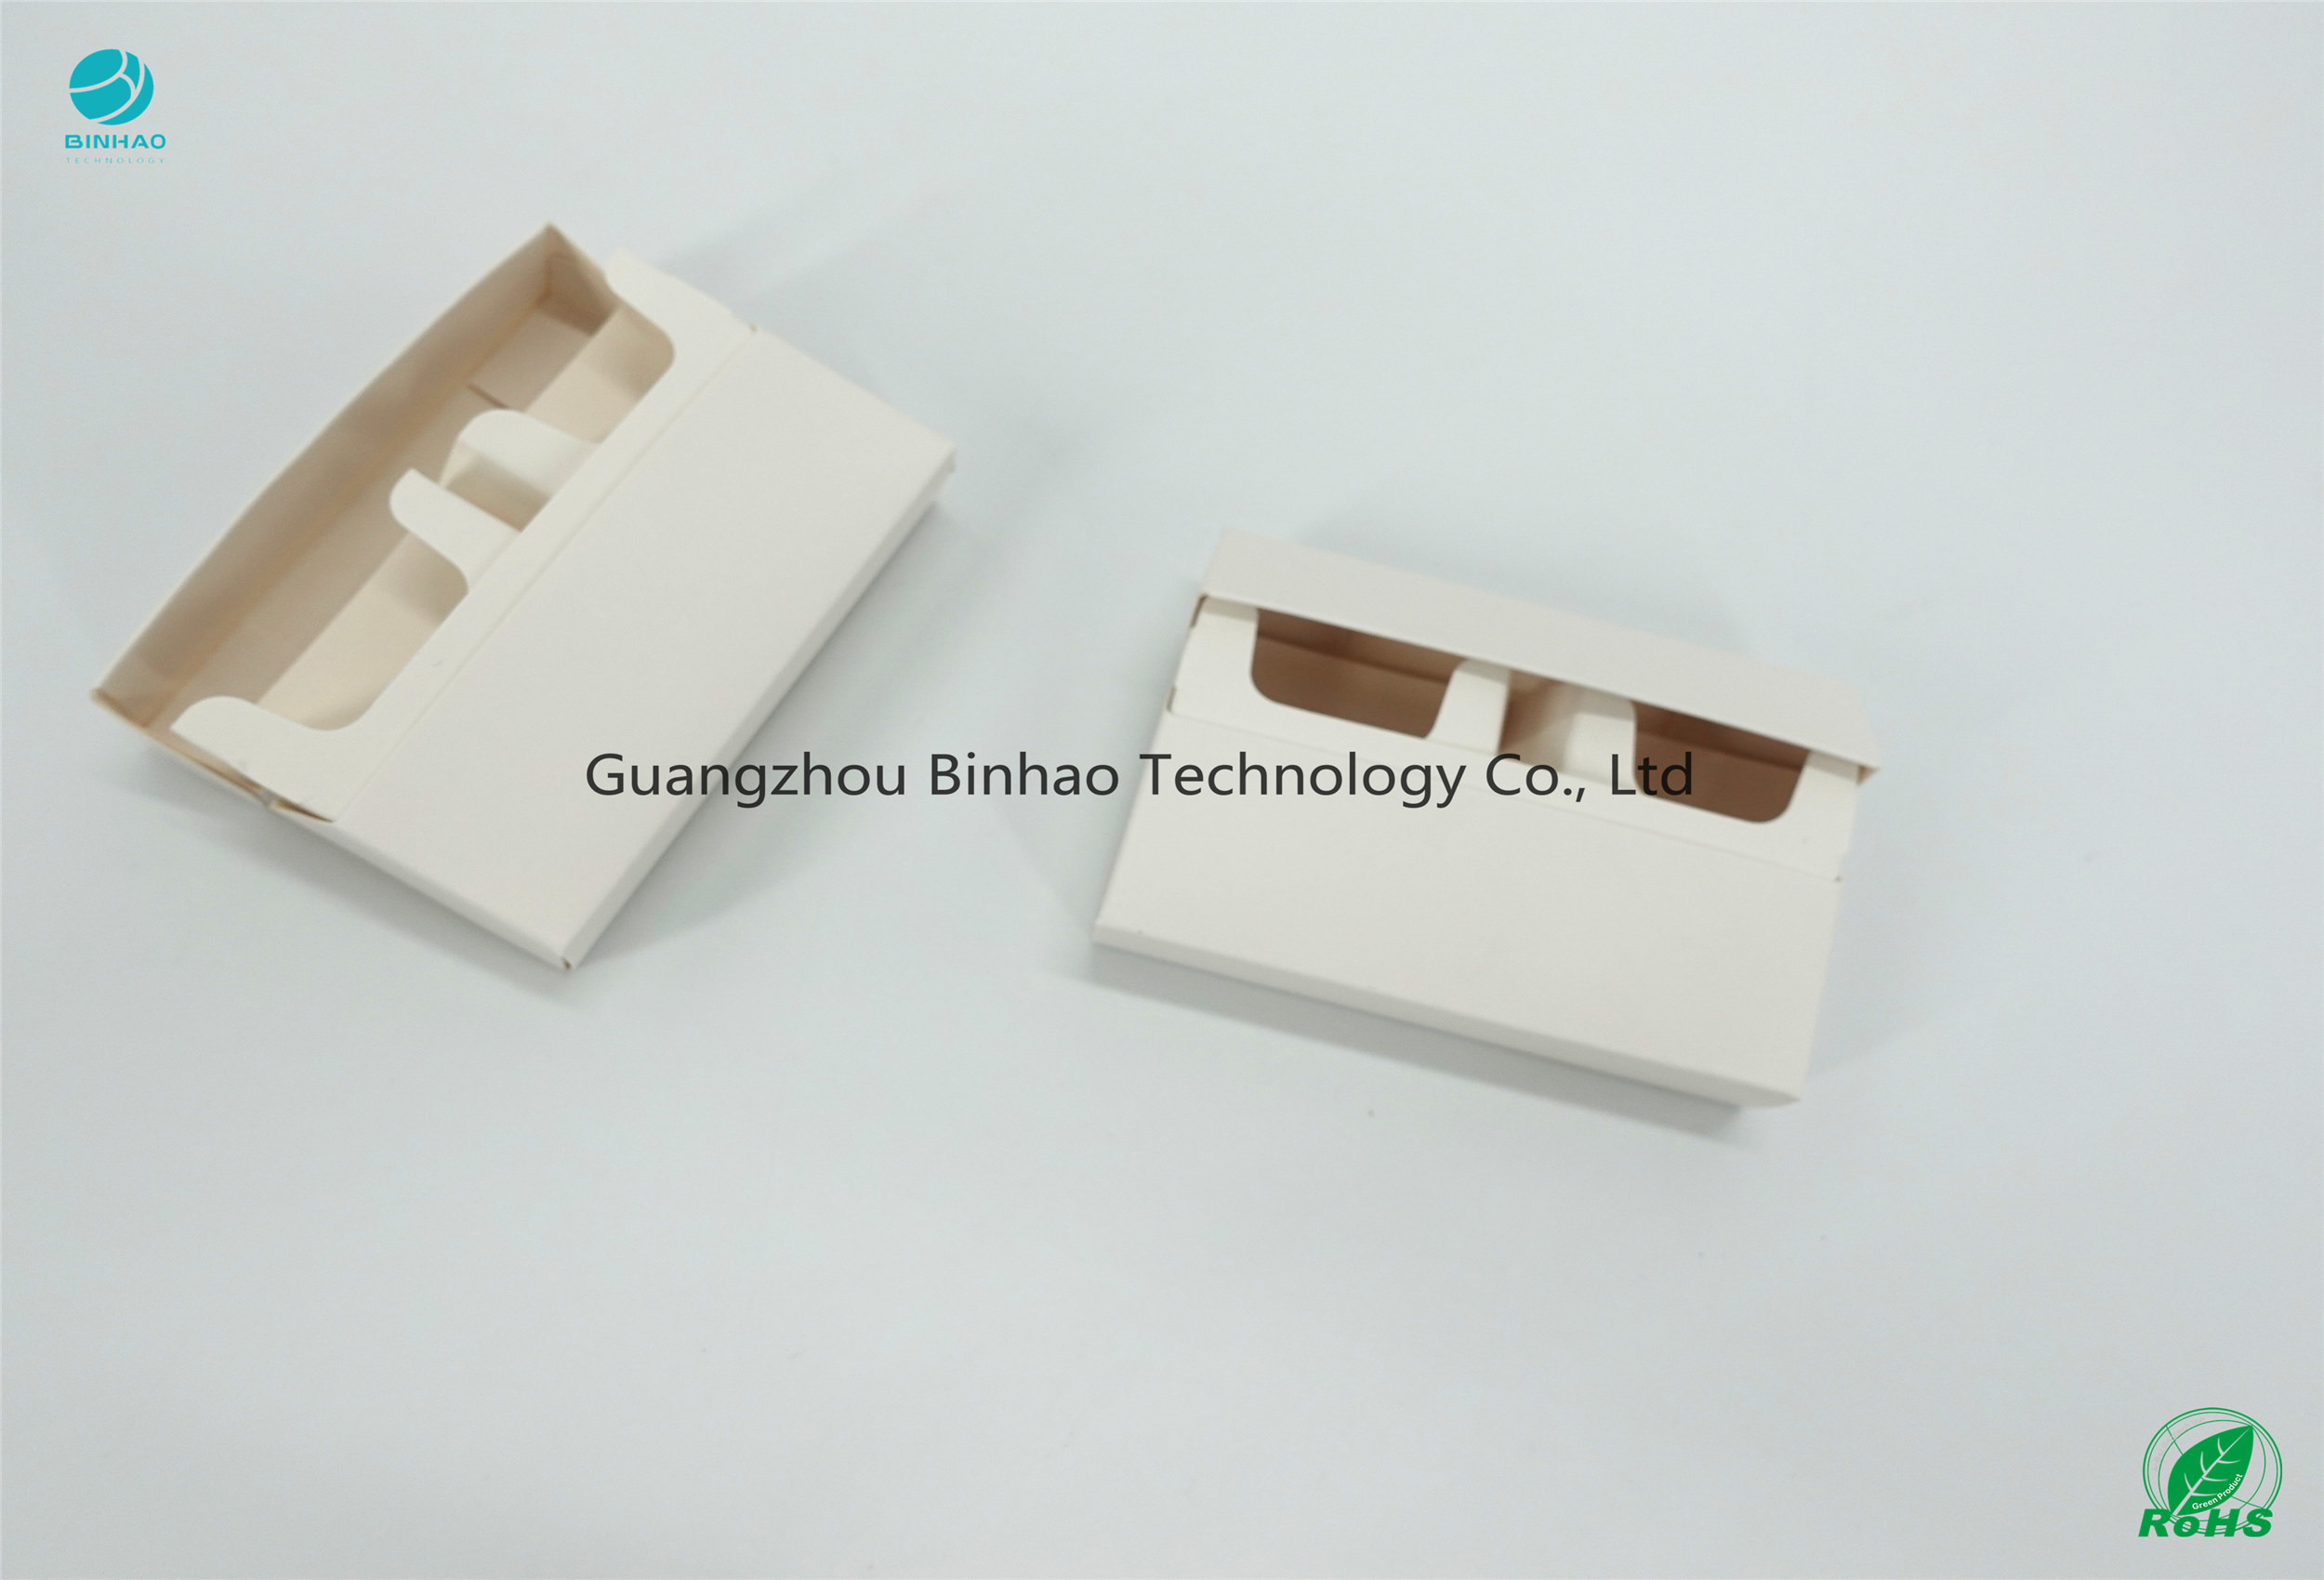 Faltbare E-Zigaretten-Paket-Material-weiße Pappe des Zigaretten-Maschinenhälften-Kasten-HNB